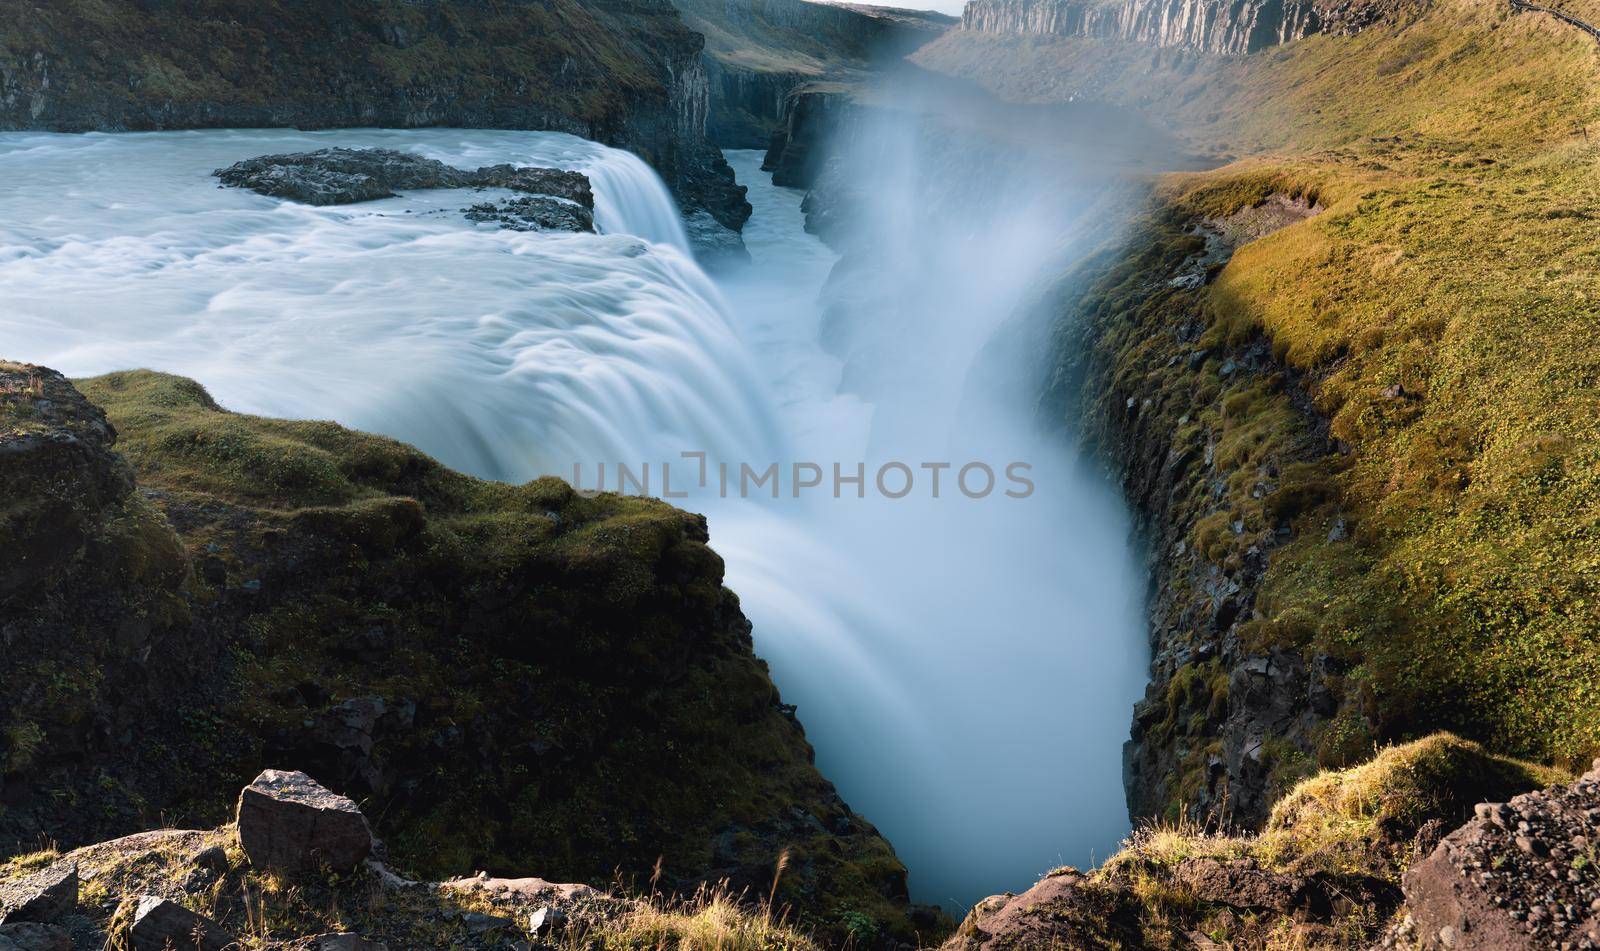 Spectacular Gullfoss Golden falls waterfall long exposure down to the deep canyon